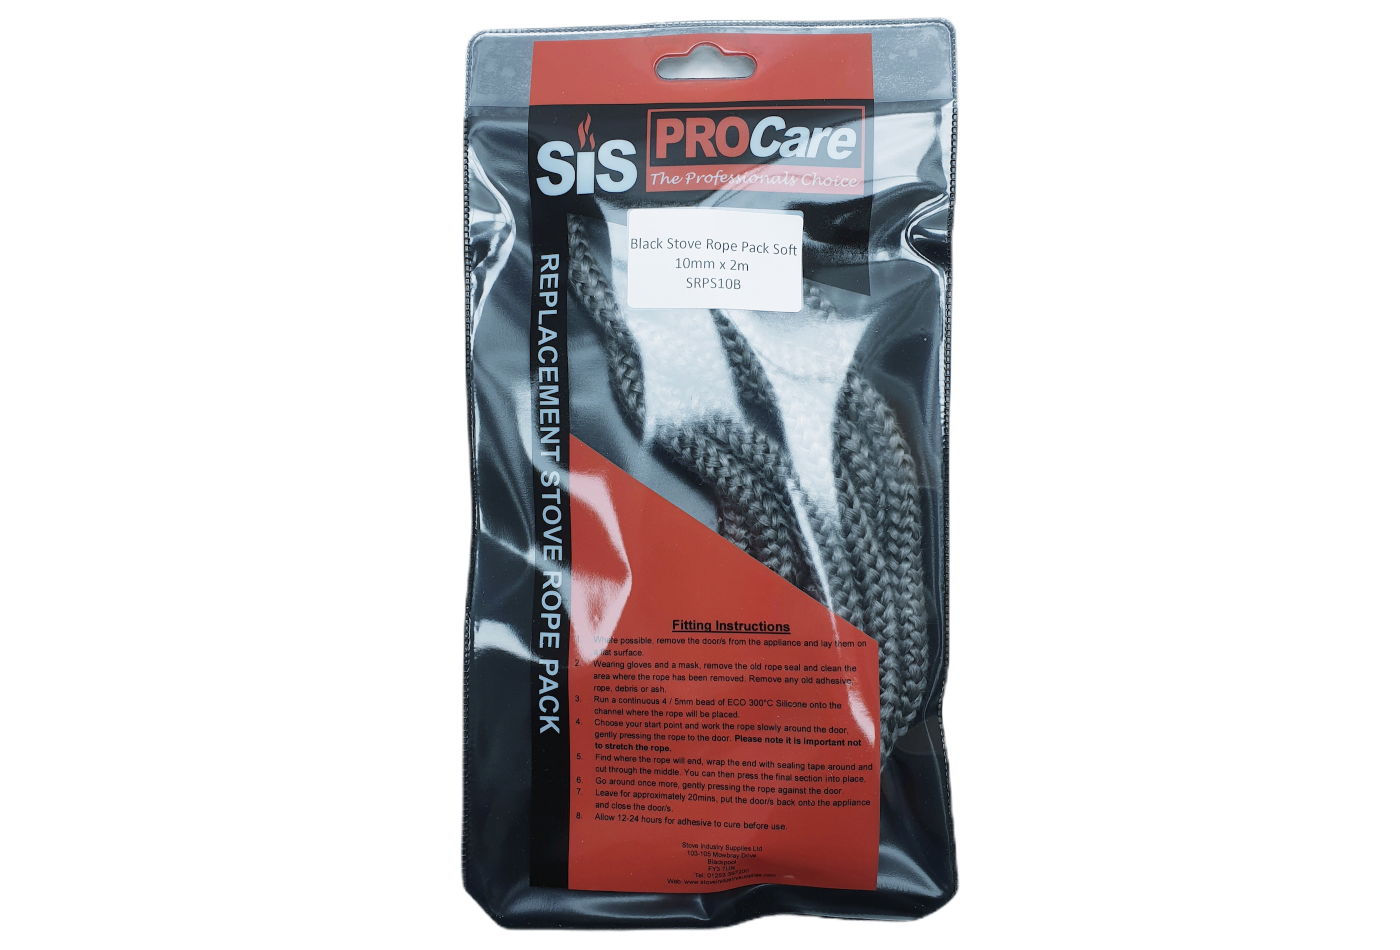 SiS Procare Black 10 milimetre x 2 metre Soft Stove Rope Pack - product code SRPS10B